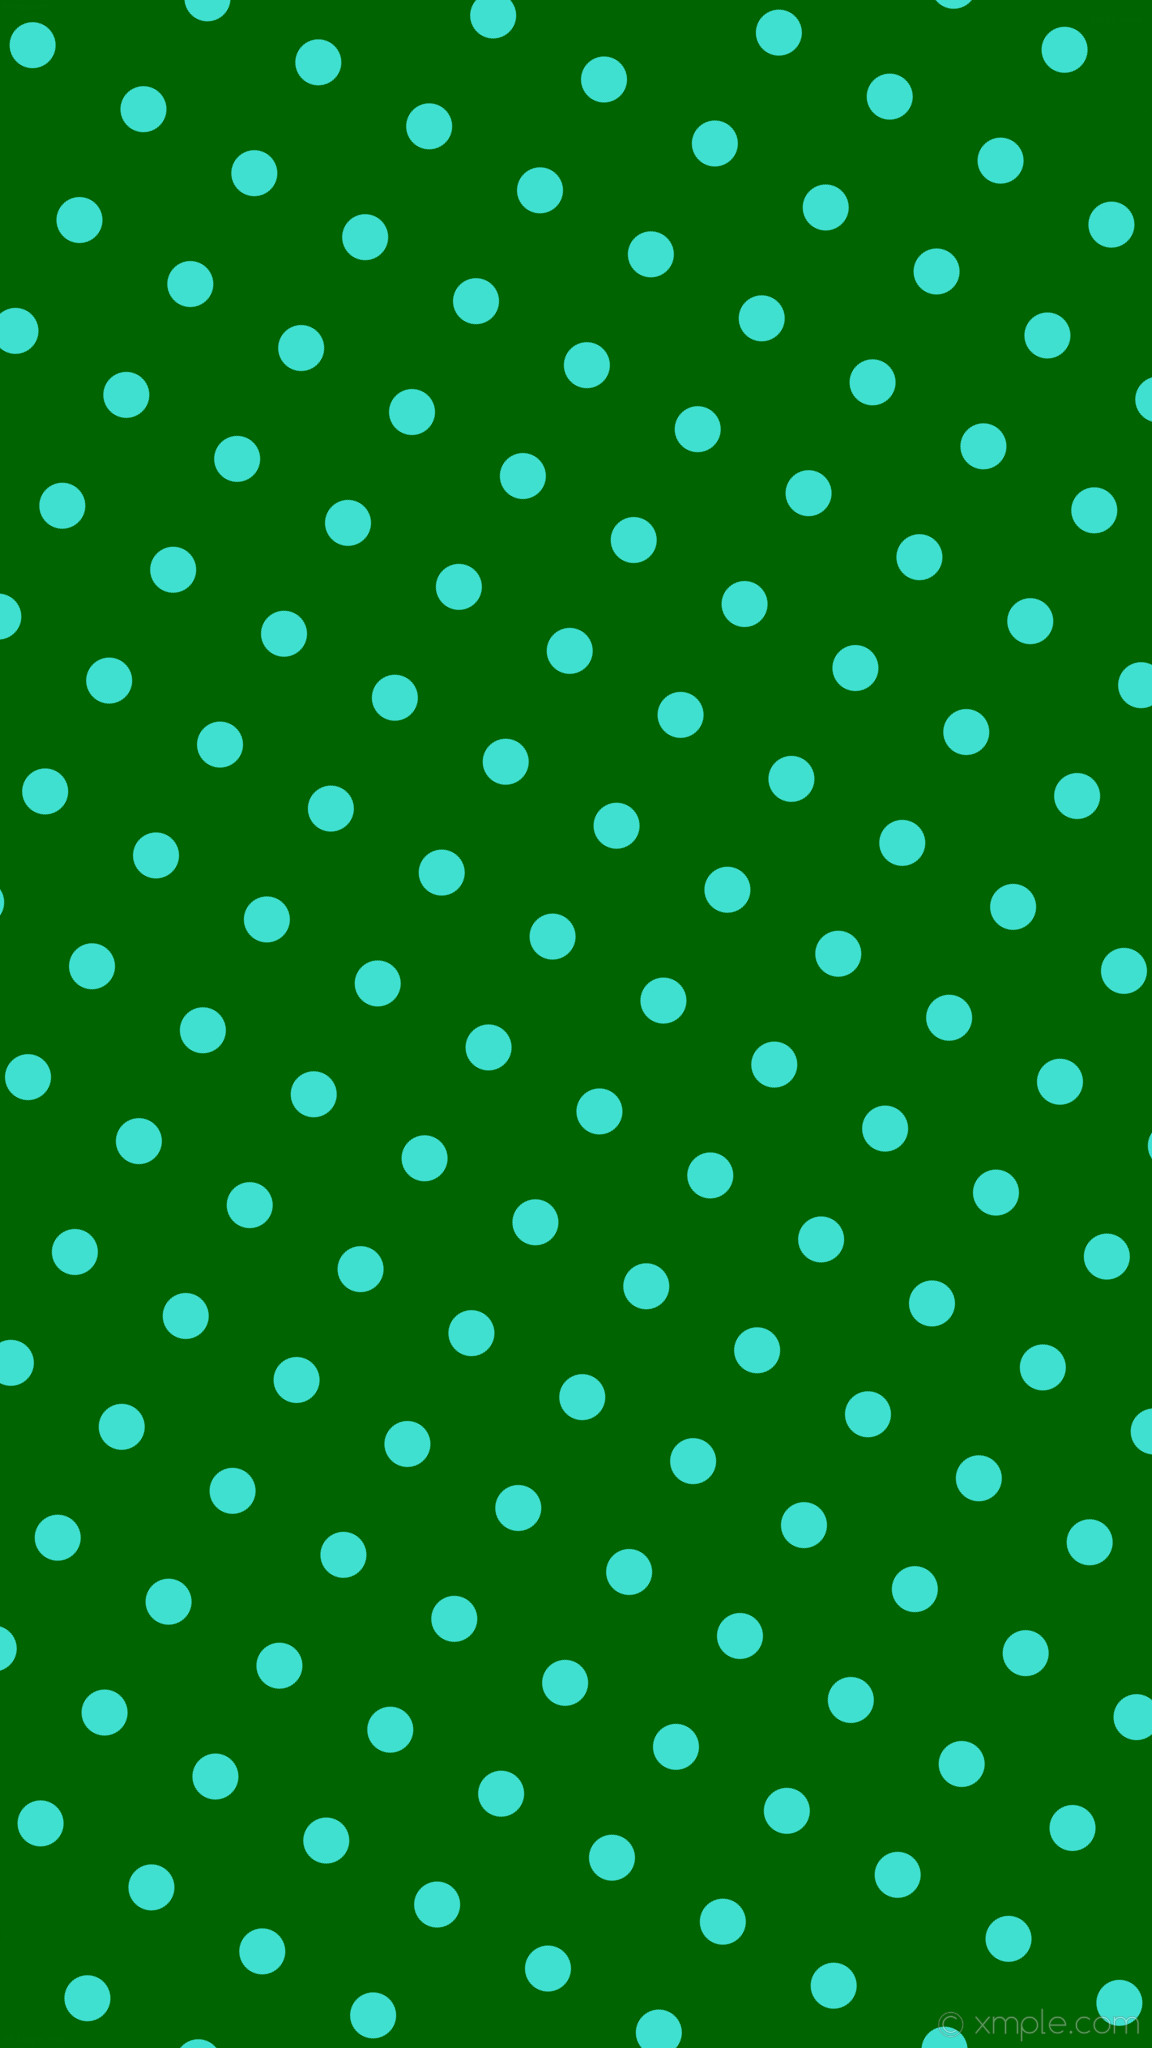 1152x2048 wallpaper green polka dots blue spots dark green turquoise #006400 #40e0d0  150Â° 46px